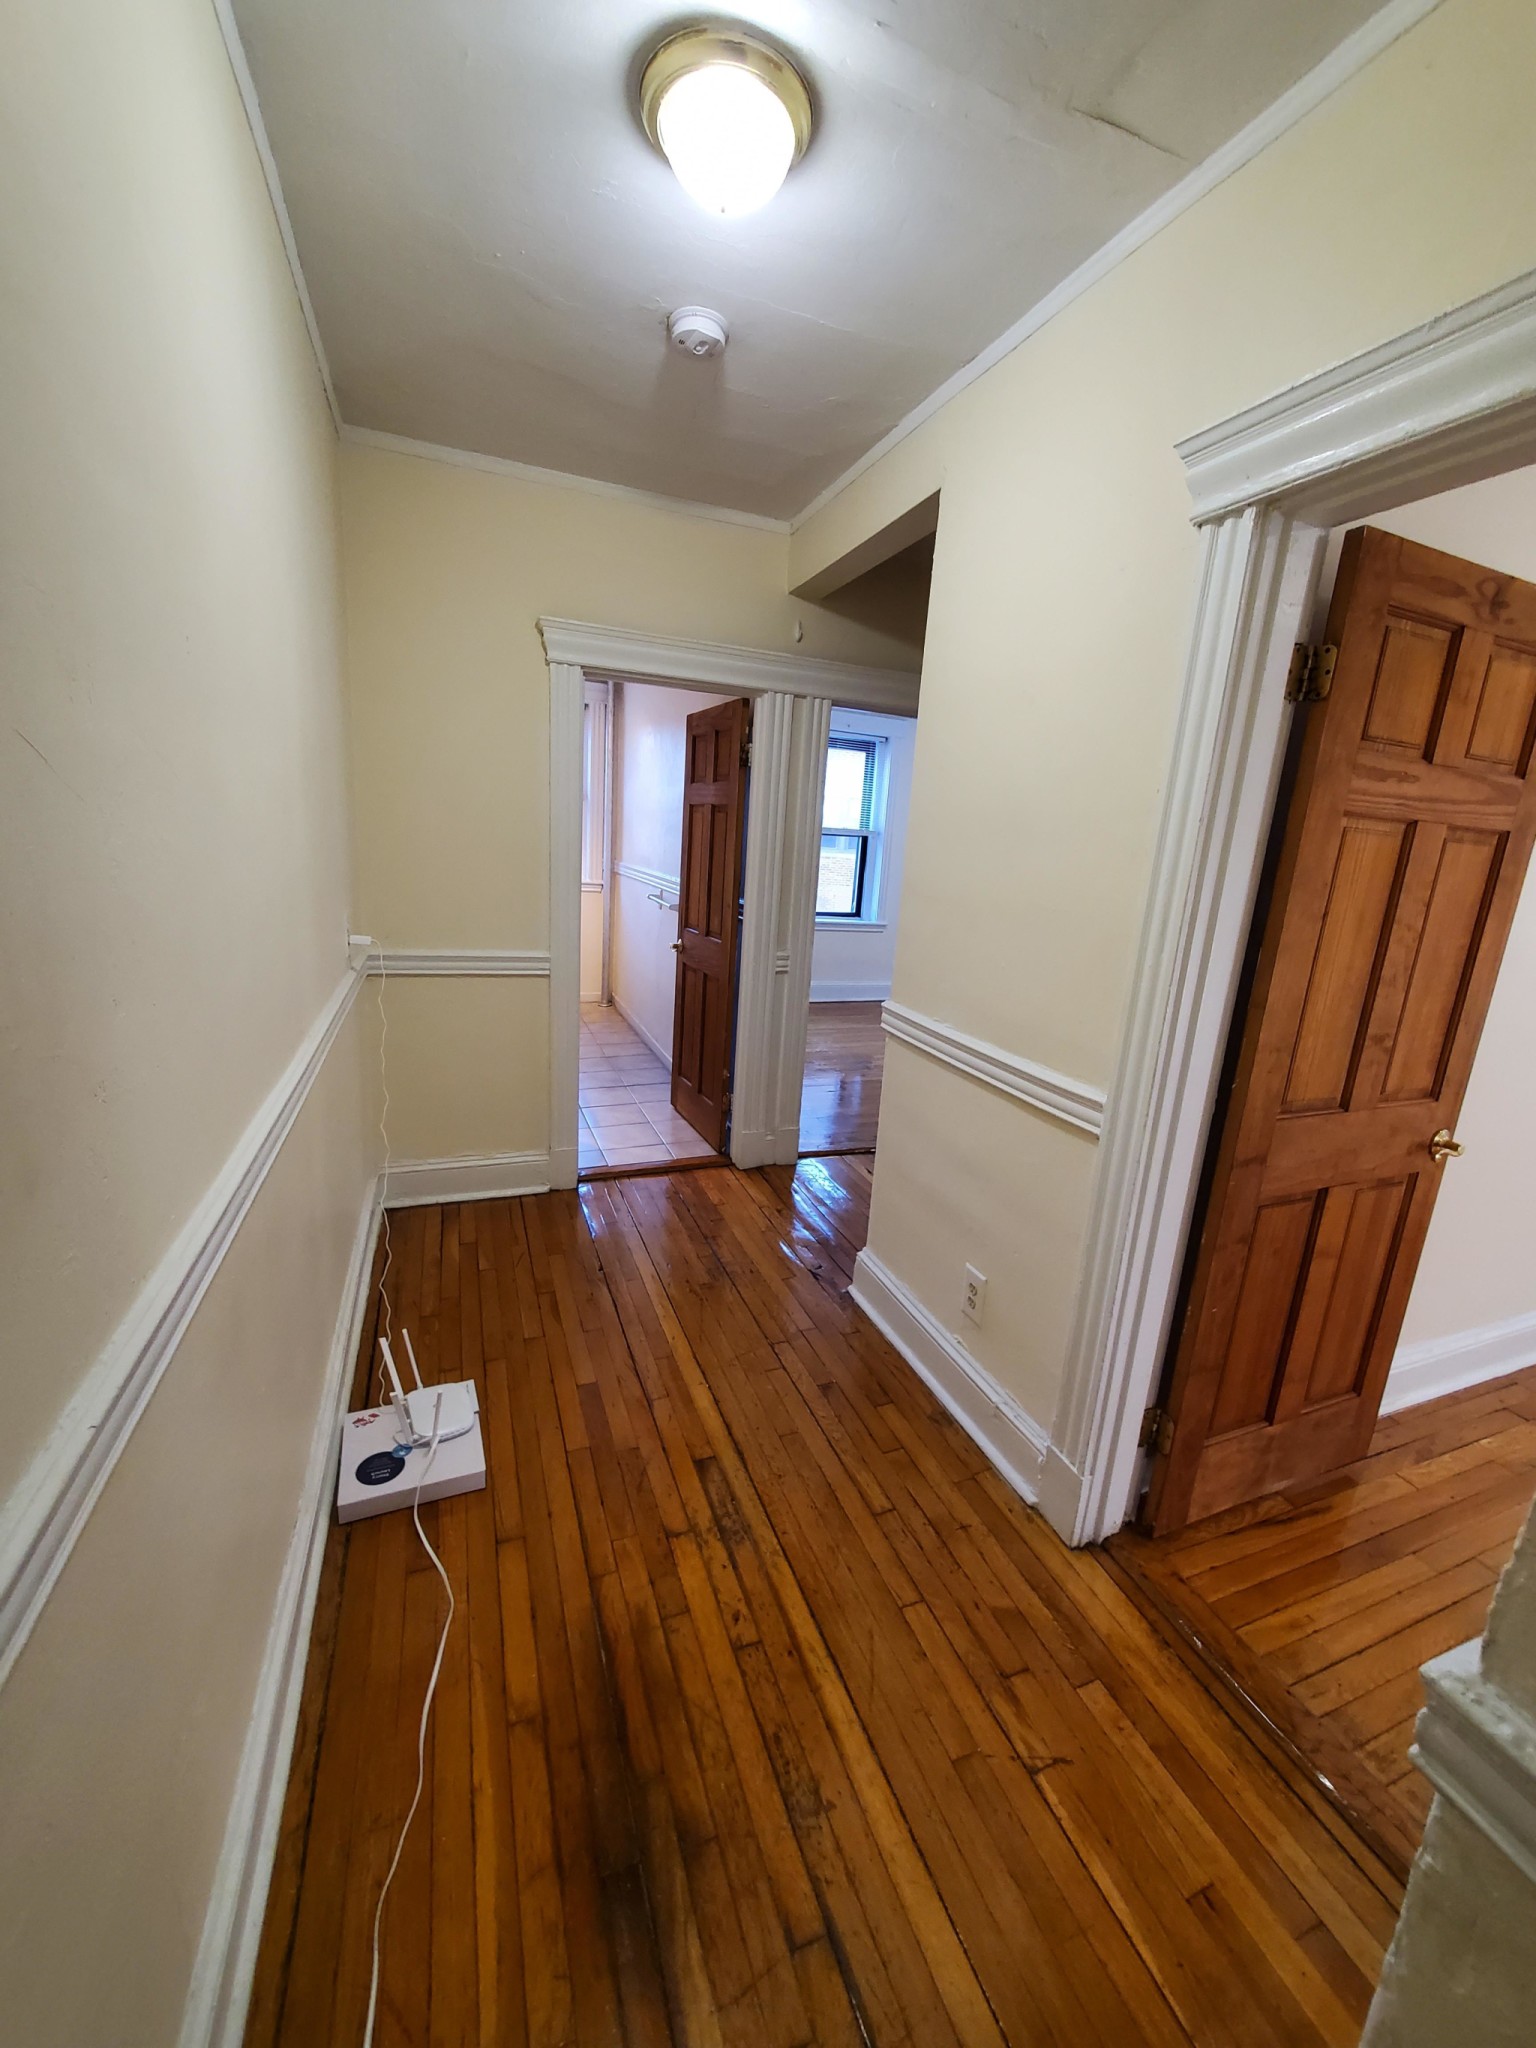 Photos of apartment on Hemenway,Boston MA 02115